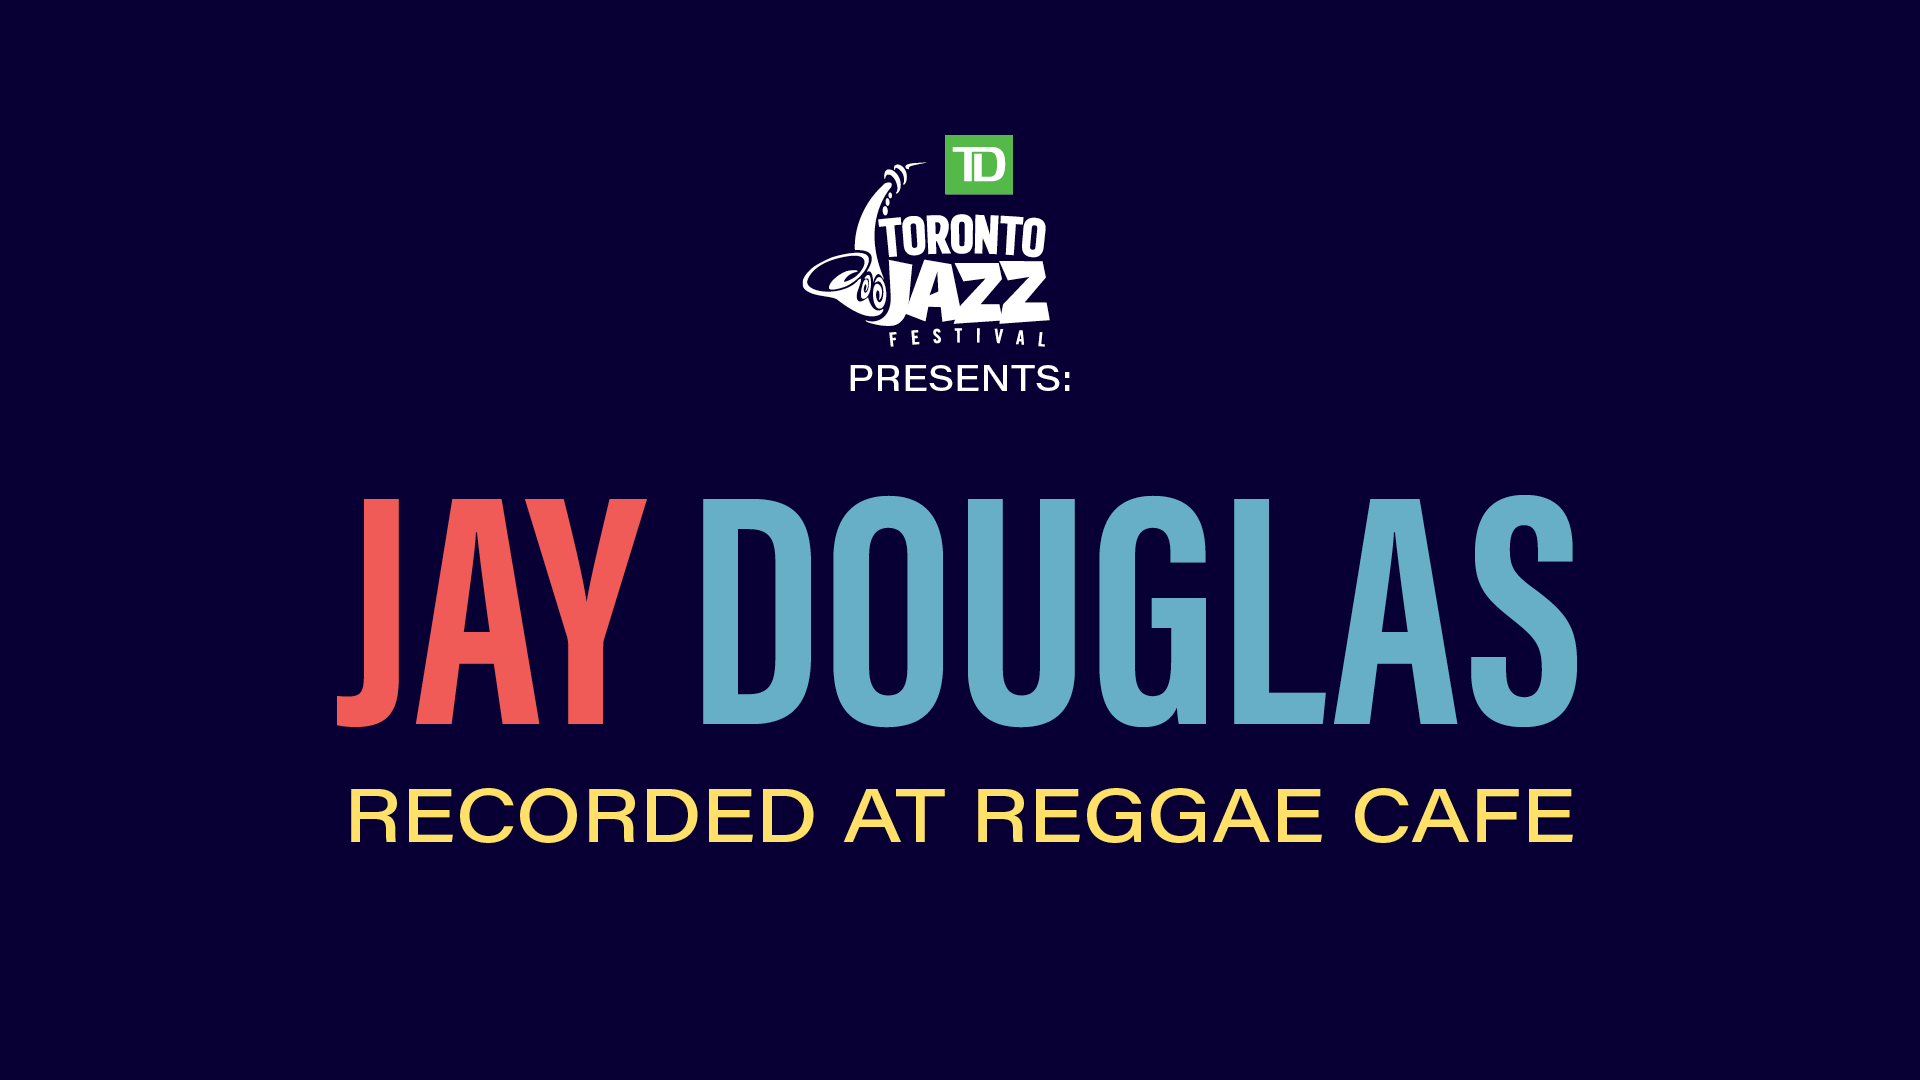 TD Toronto Jazz Festival presents… City of Culture: Jay Douglas